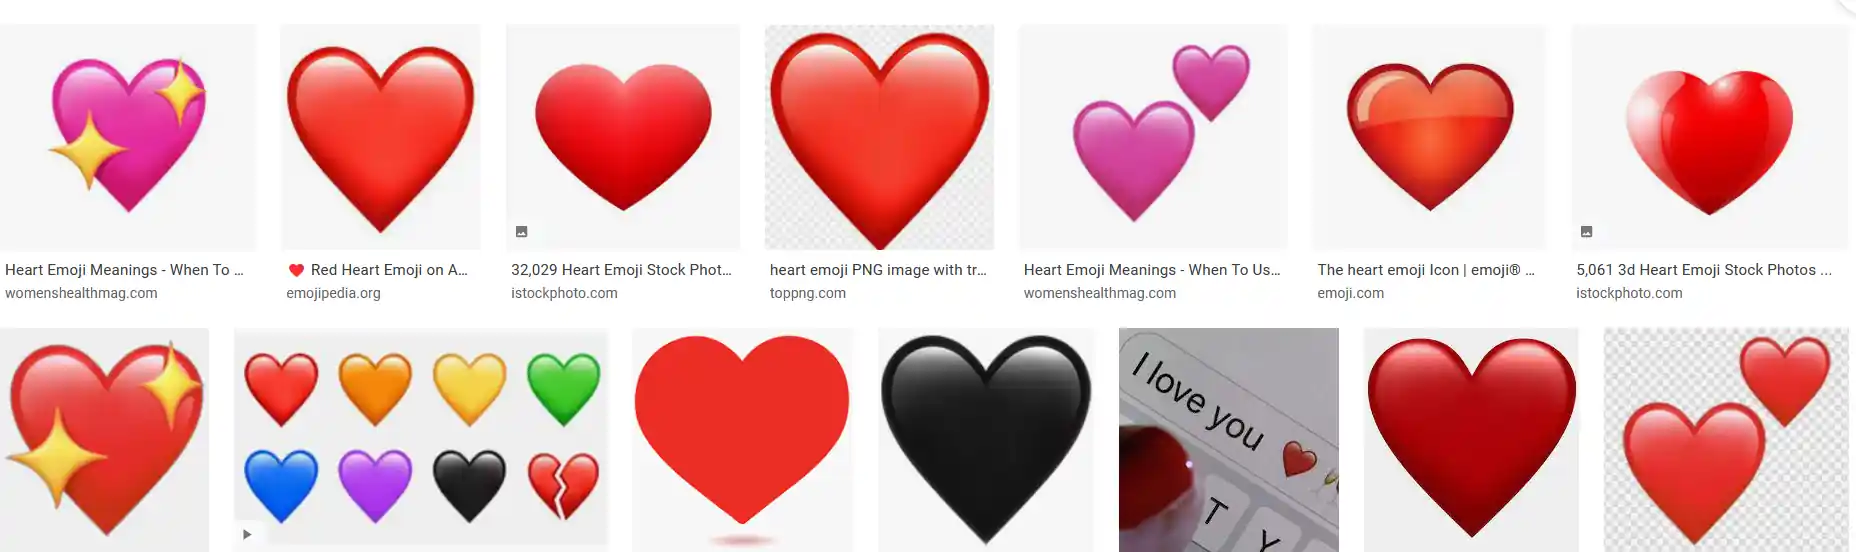 heart emoji from google